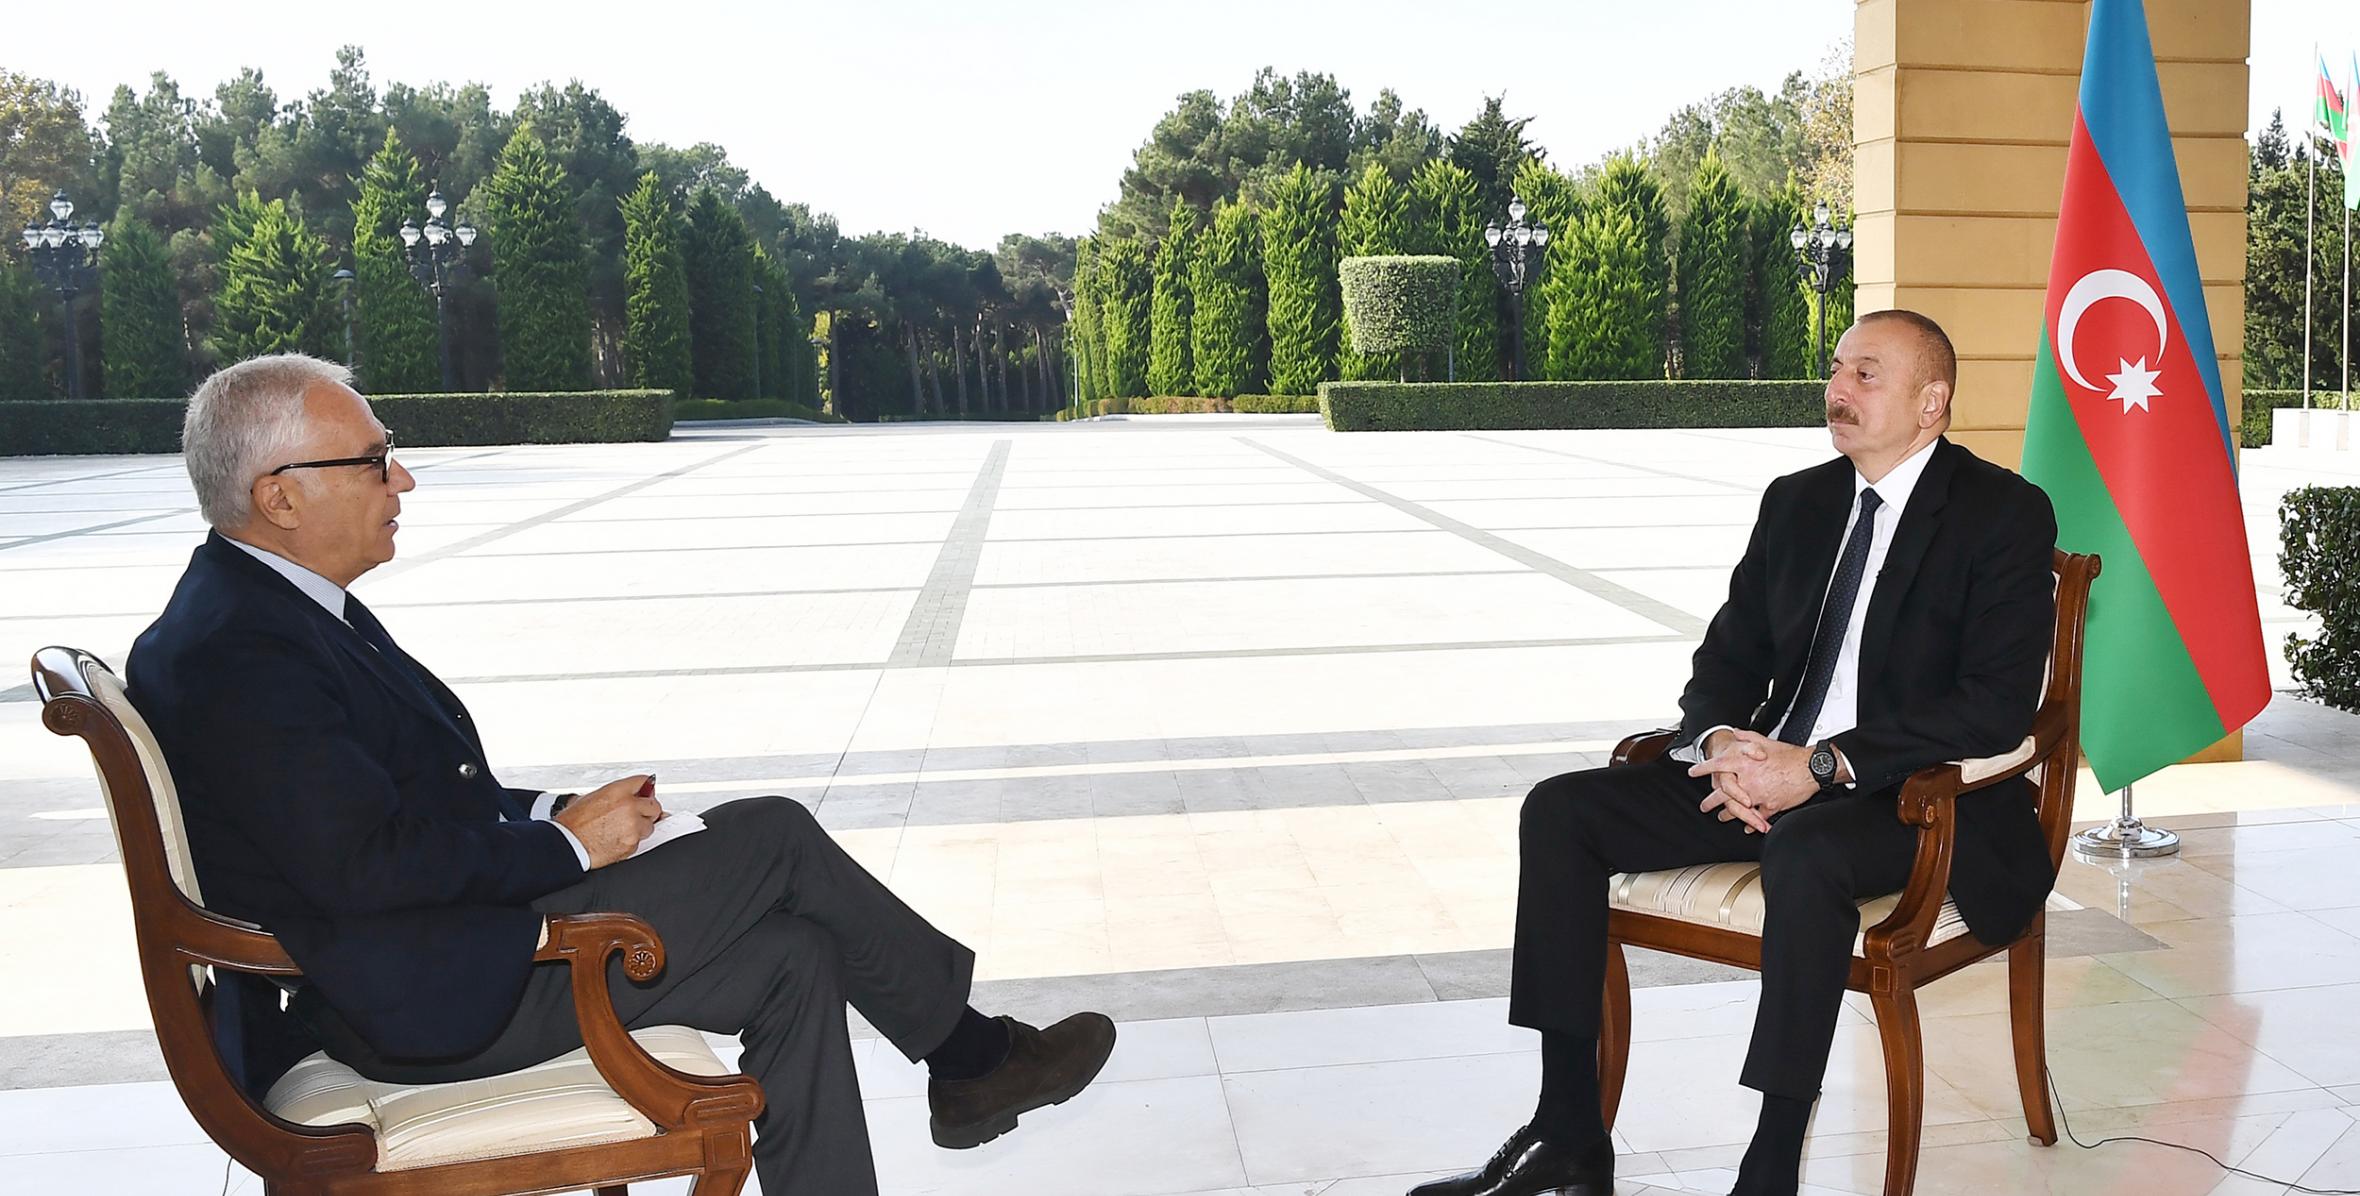 Ilham Aliyev was interviewed by Italian La Repubblica newspaper